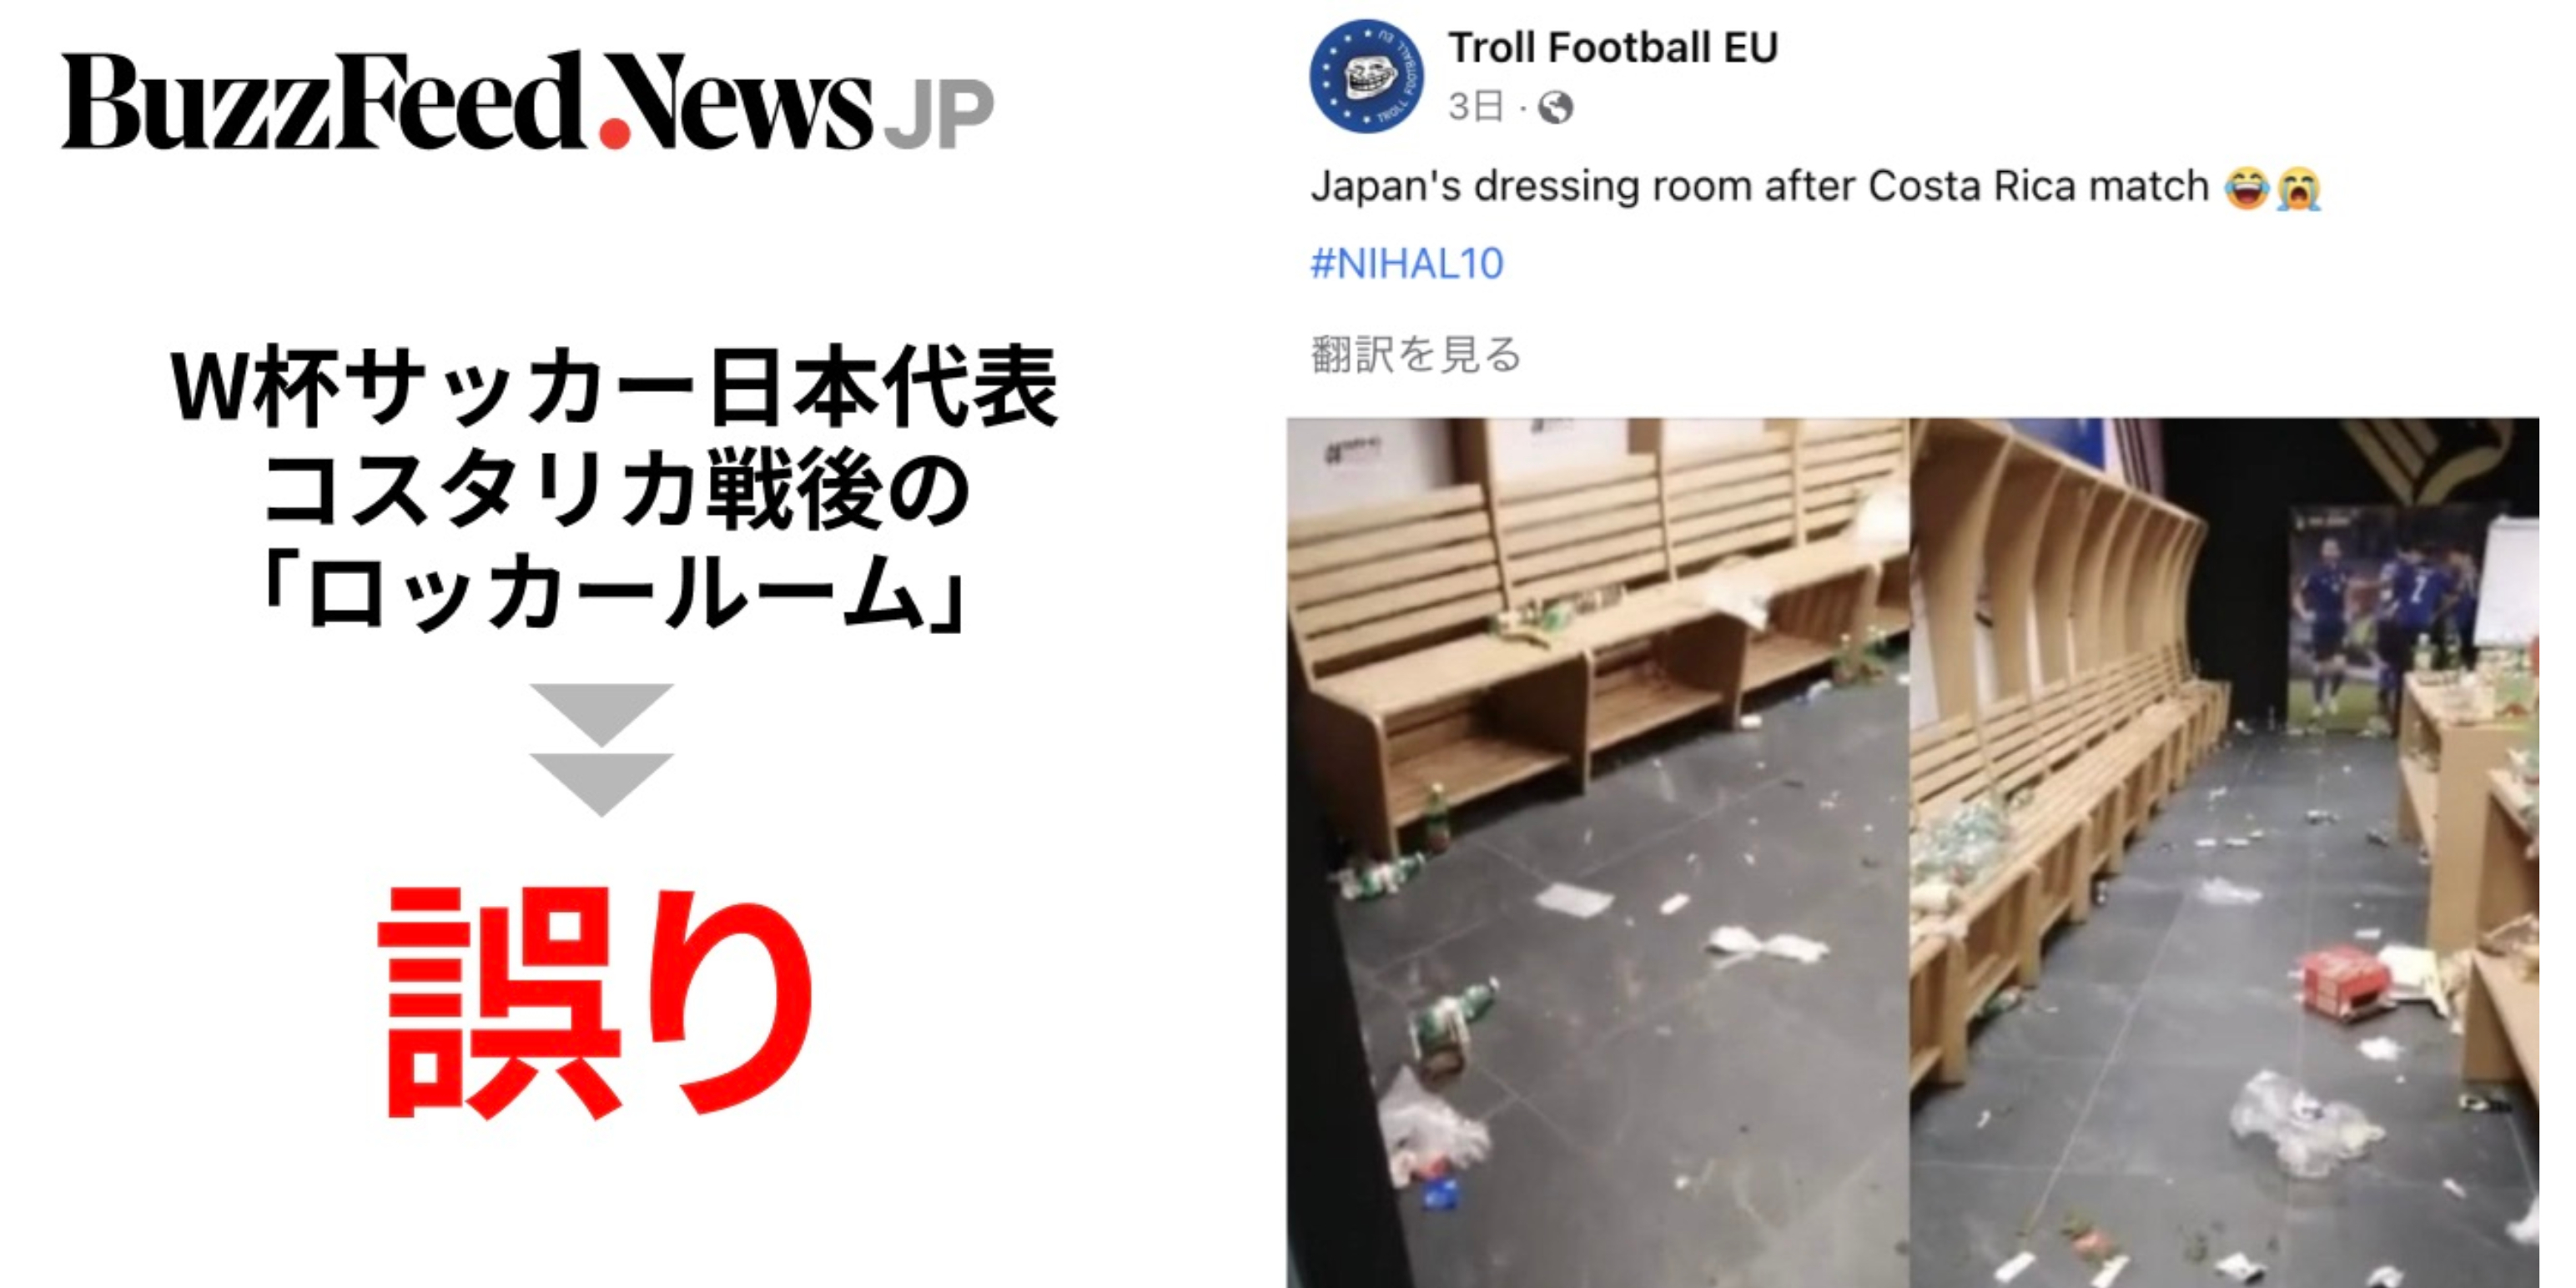 W杯 日本代表のロッカールームにゴミが散乱 誤り 試合後に海外で画像が拡散 実際は